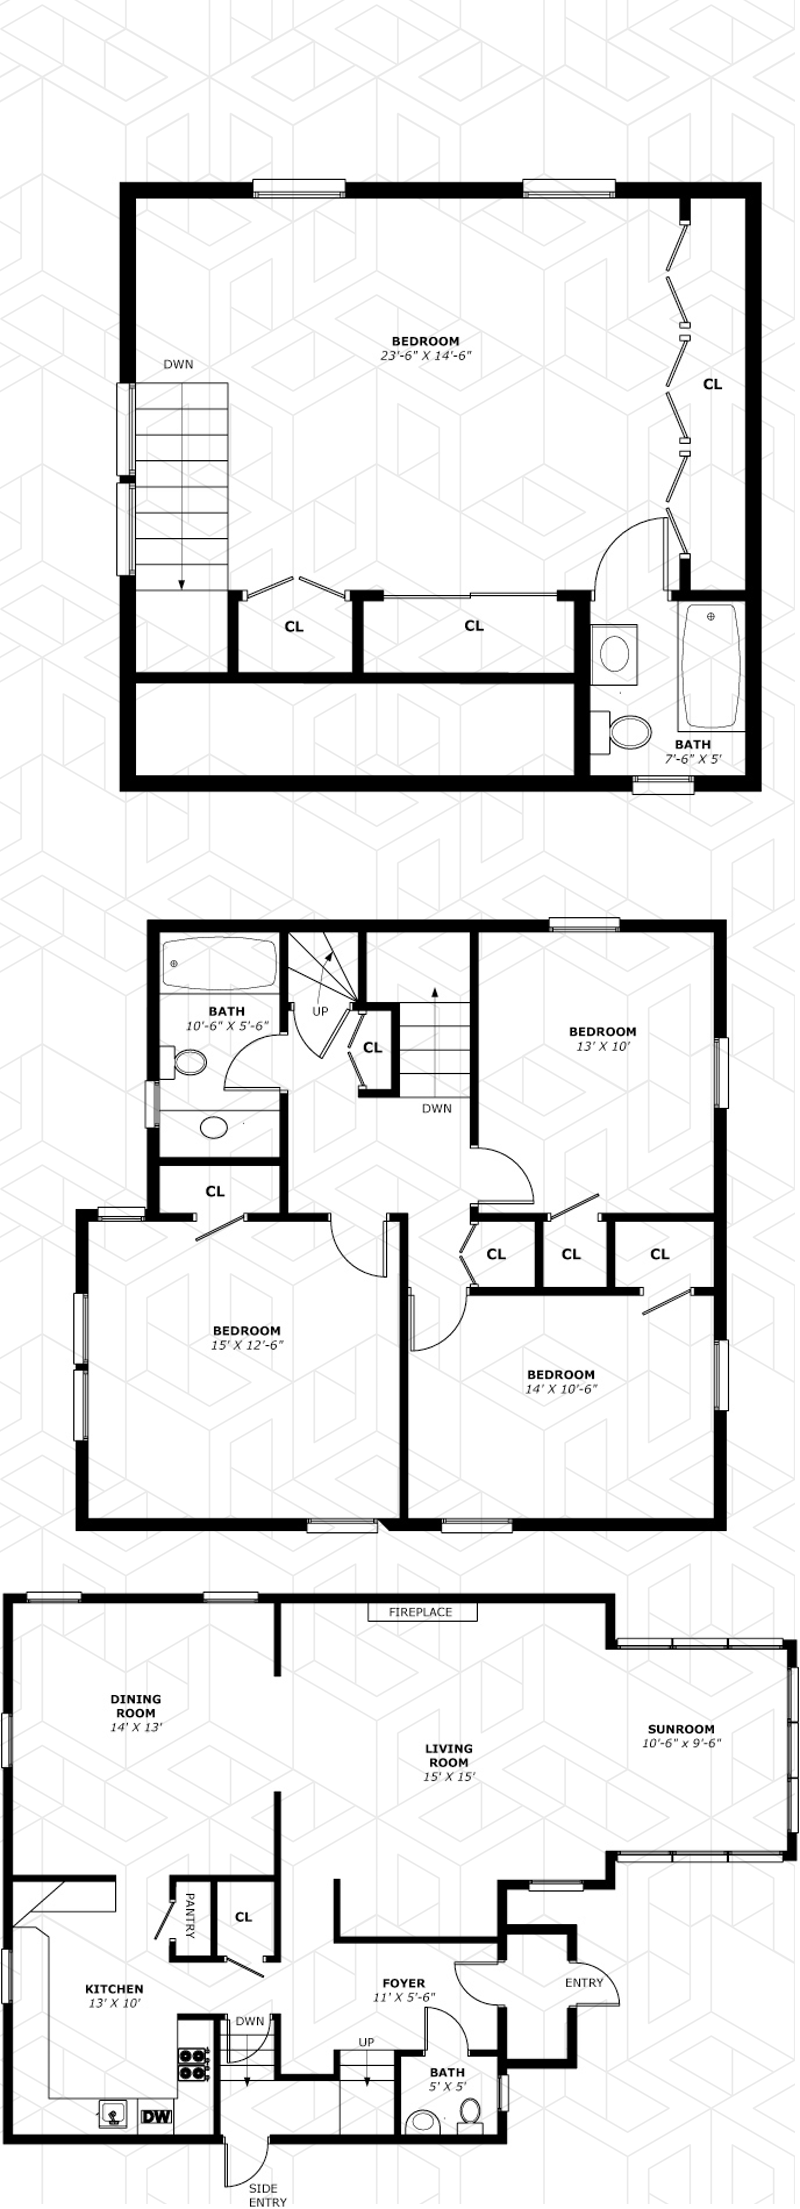 Floorplan for 30 Beechwood Terrace